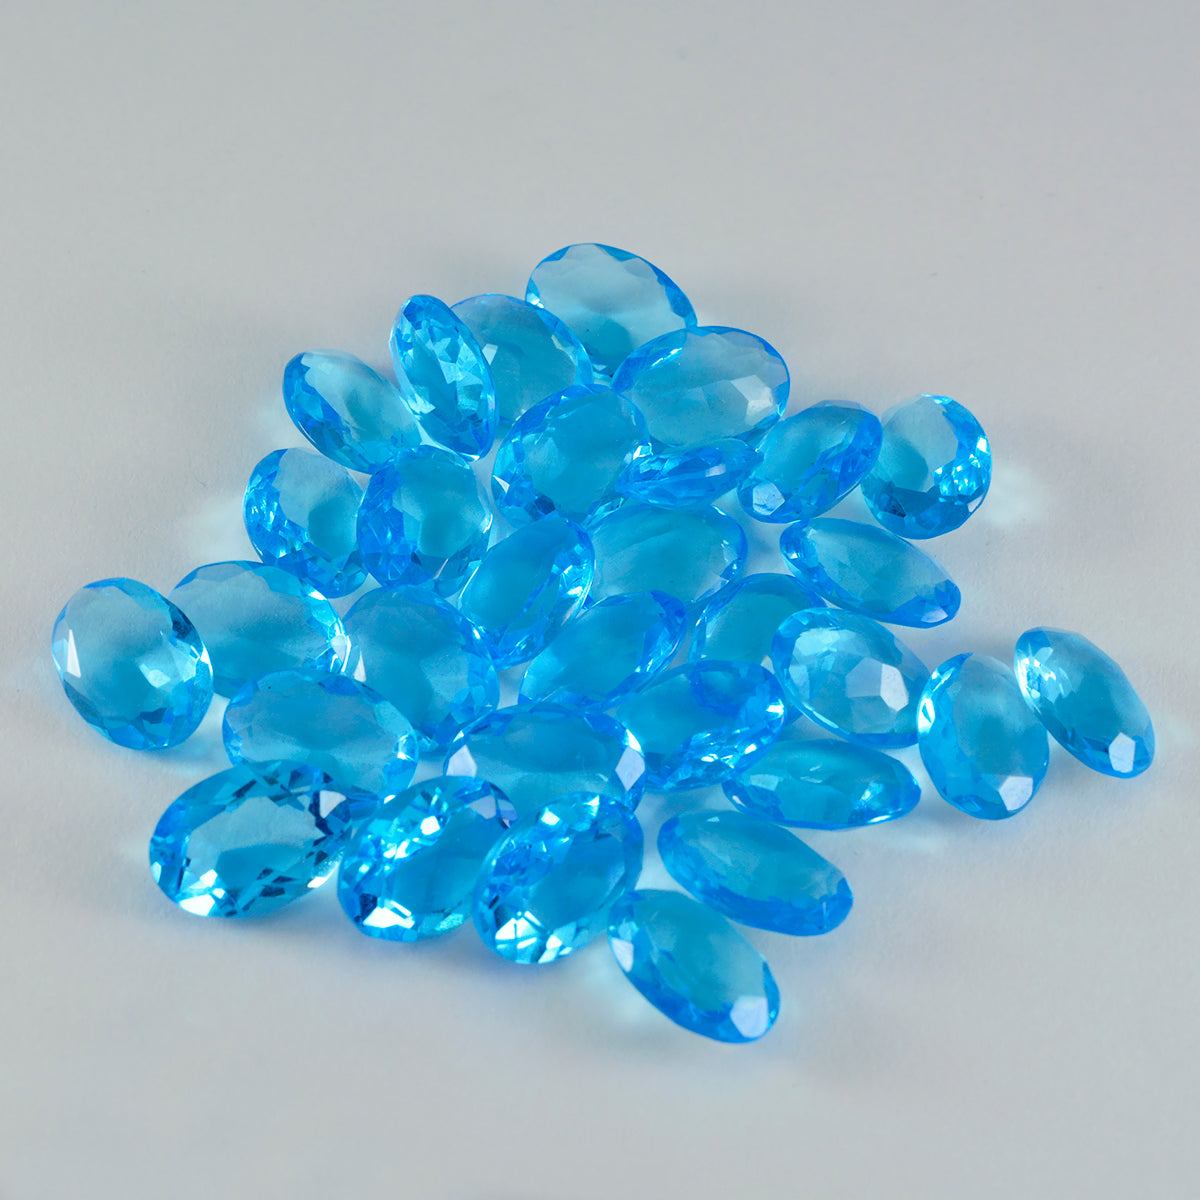 Riyogems 1PC Blue Topaz CZ Faceted 7x9 mm Oval Shape beautiful Quality Gemstone